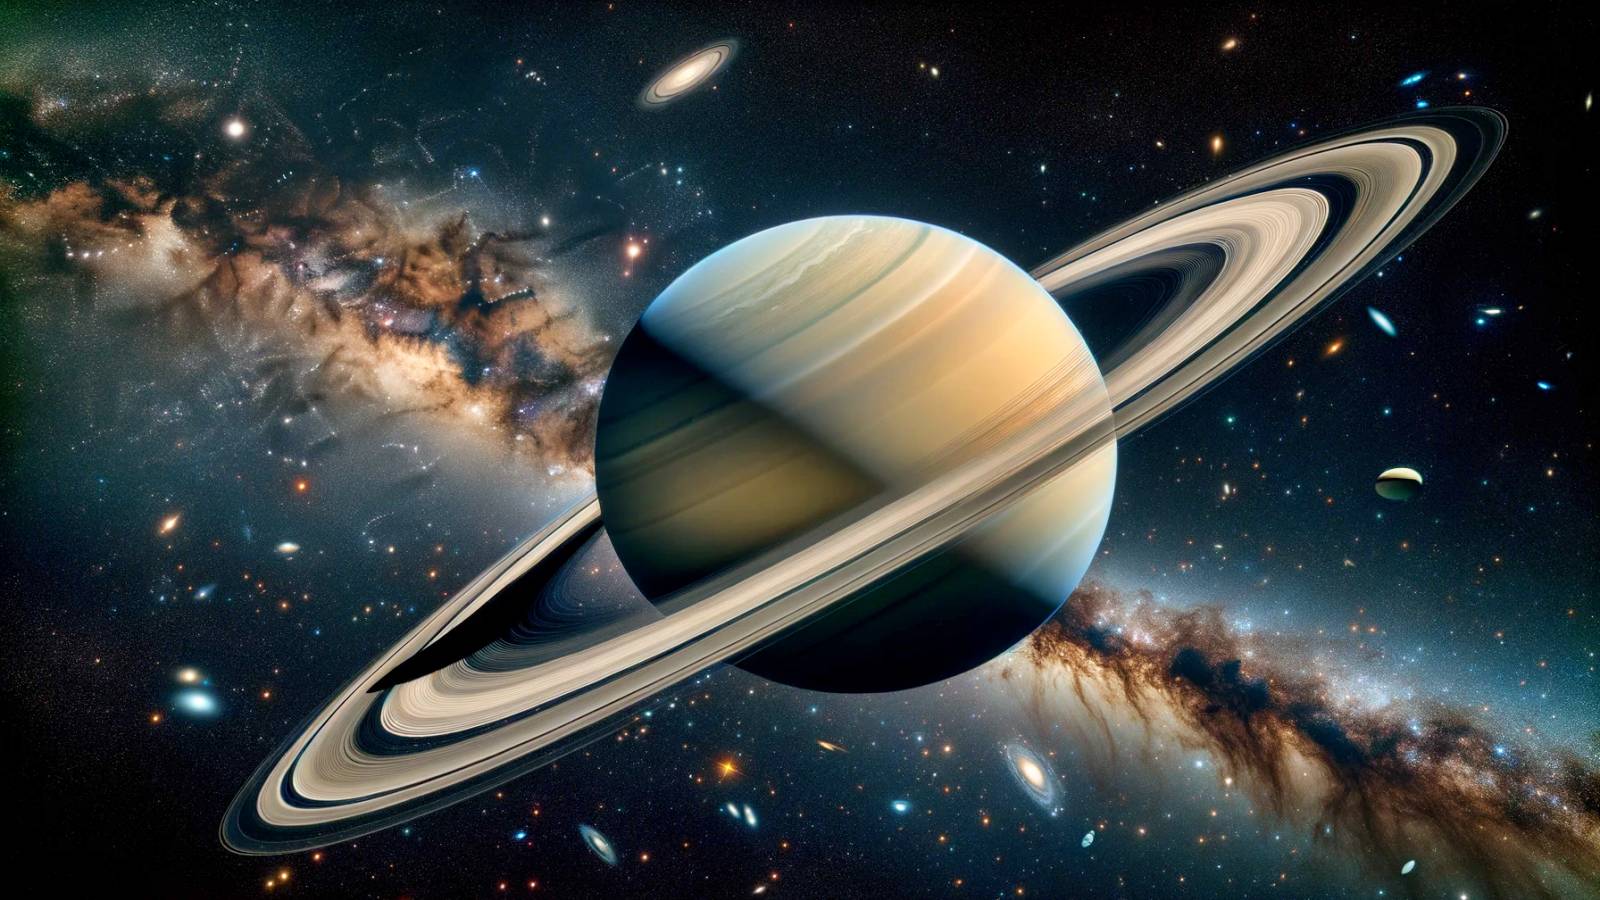 Planet Saturn NASA tillkännager Amazing Discovery Hubble-ringfragment